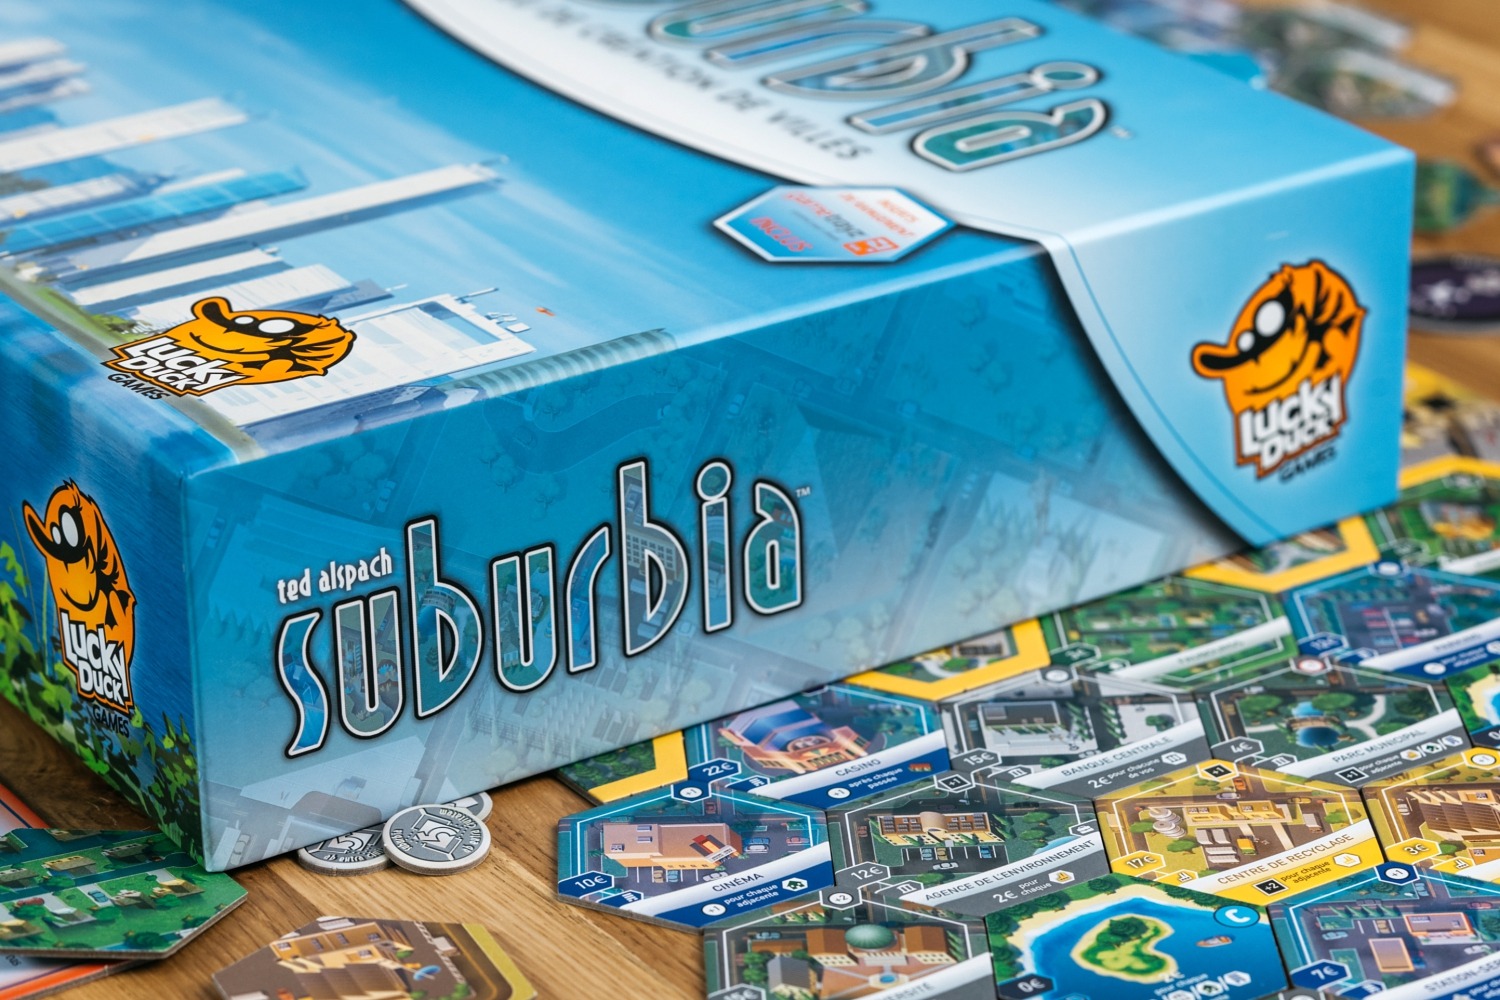 Suburbia lucky duck games jeu de société boardgame